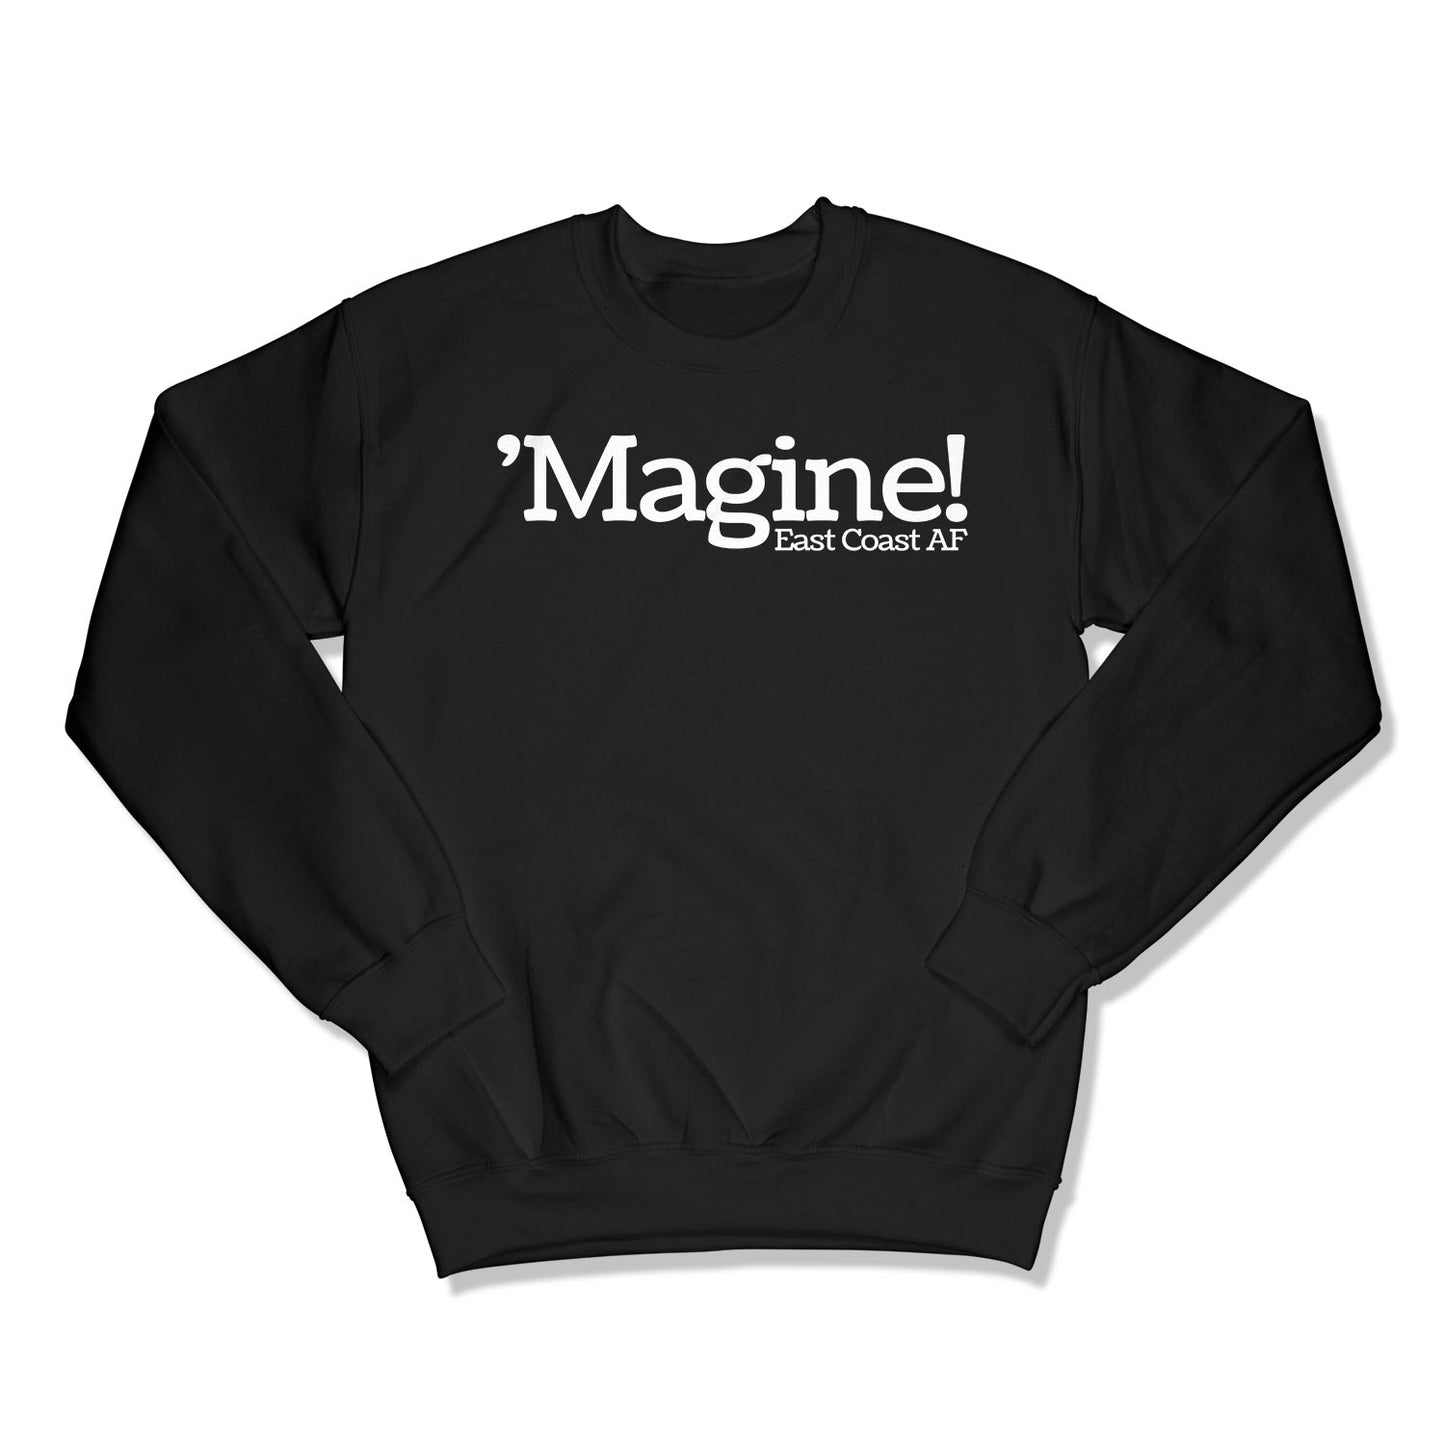 'Magine! Unisex Crewneck Sweatshirt in Color: Black - East Coast AF Apparel